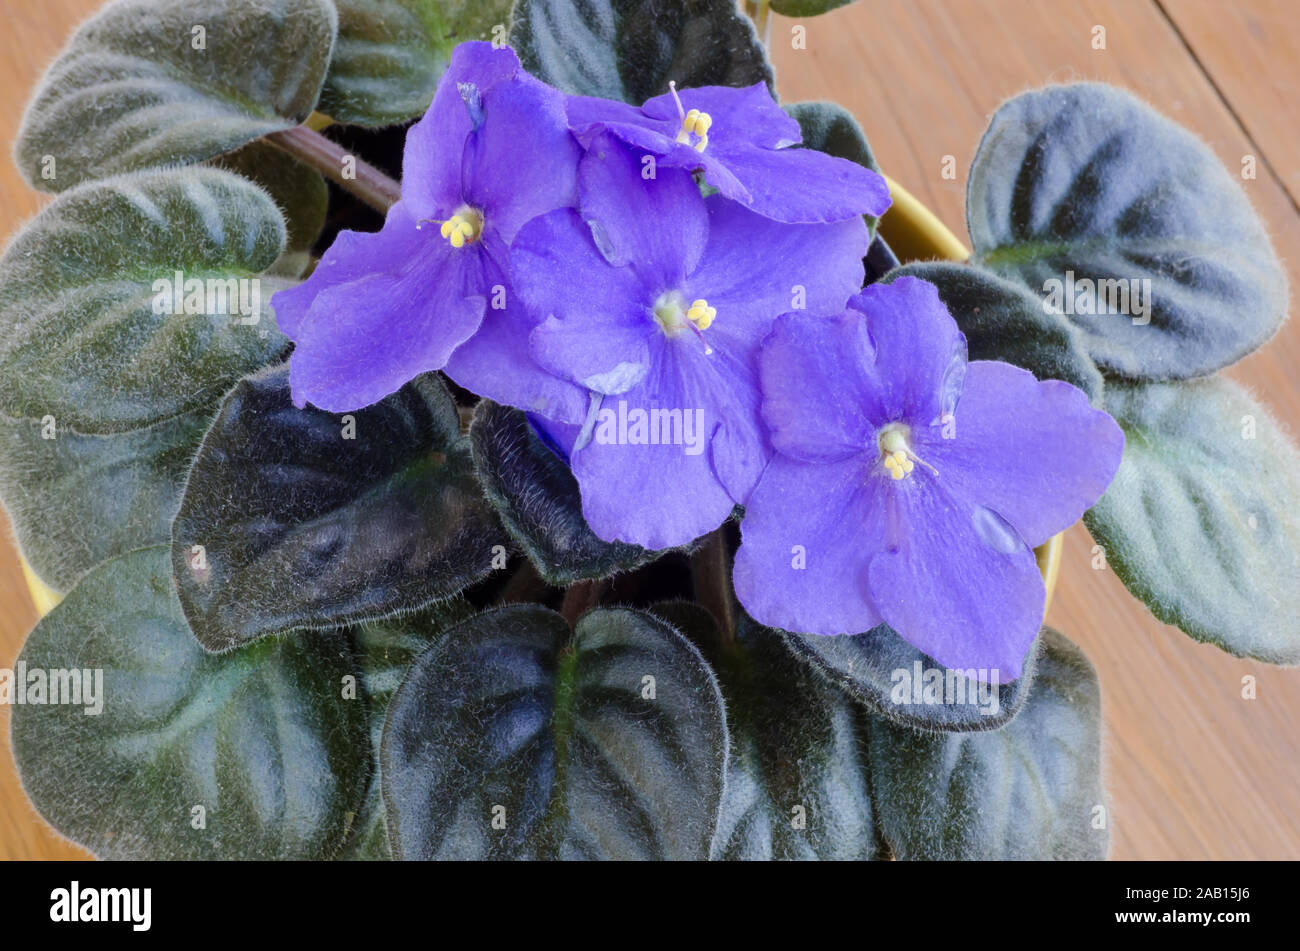 Vase of purple African Violets. Saintpaulia Stock Photo